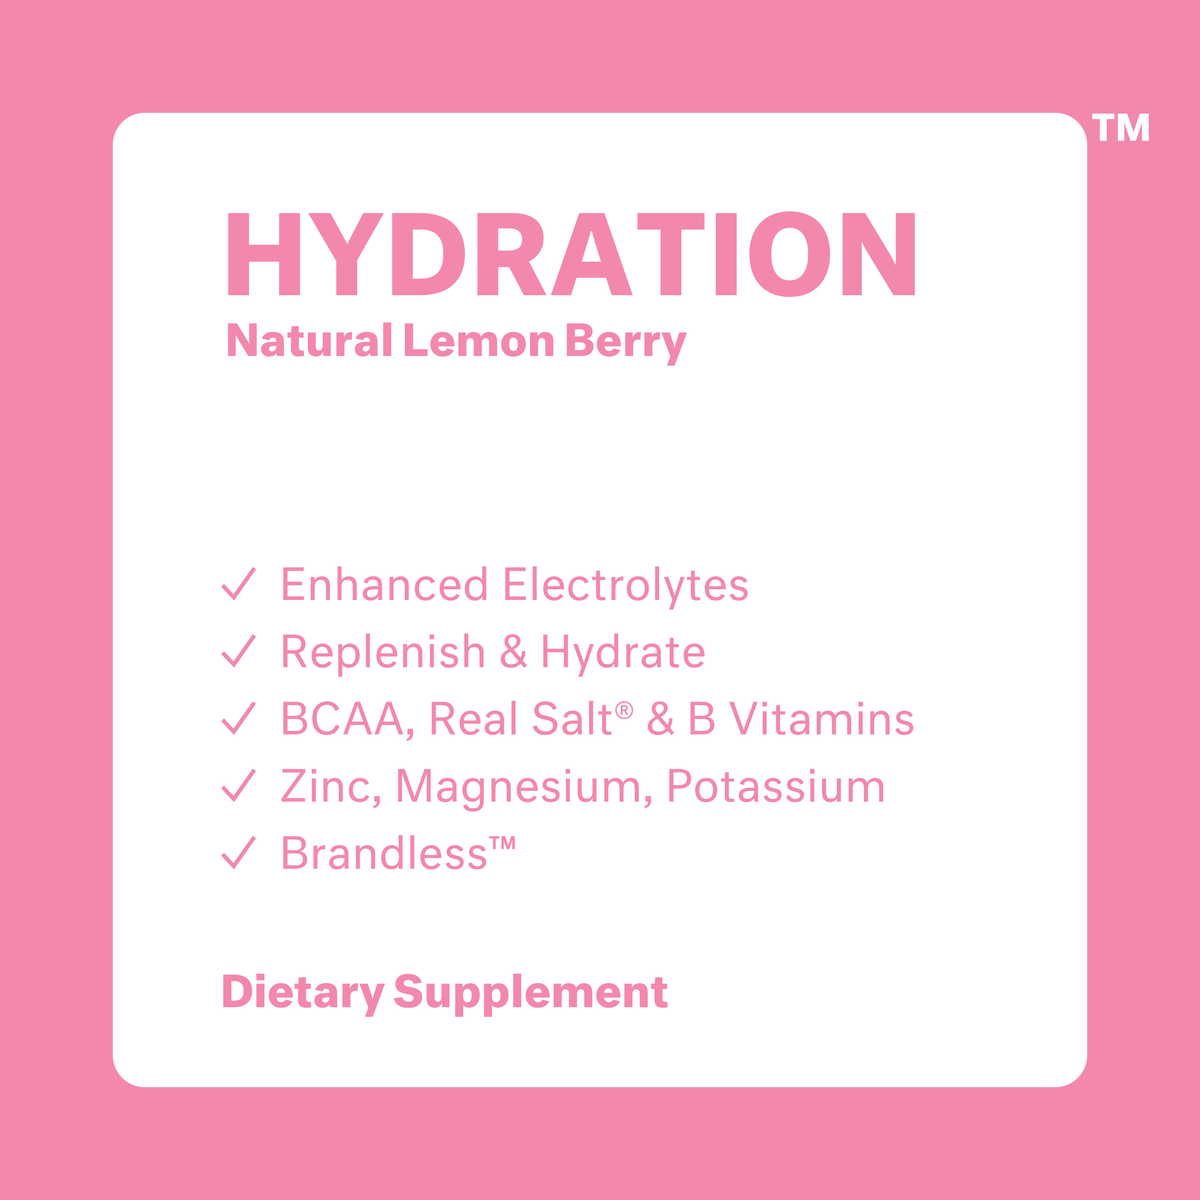 Hydration: Natural Lemon Berry. Enhanced electrolytes, replenish and hydrate, BCAA Real Salt, ,and B vitamins, Zinc Magnesium Potassium, Brandless. Dietary Supplement